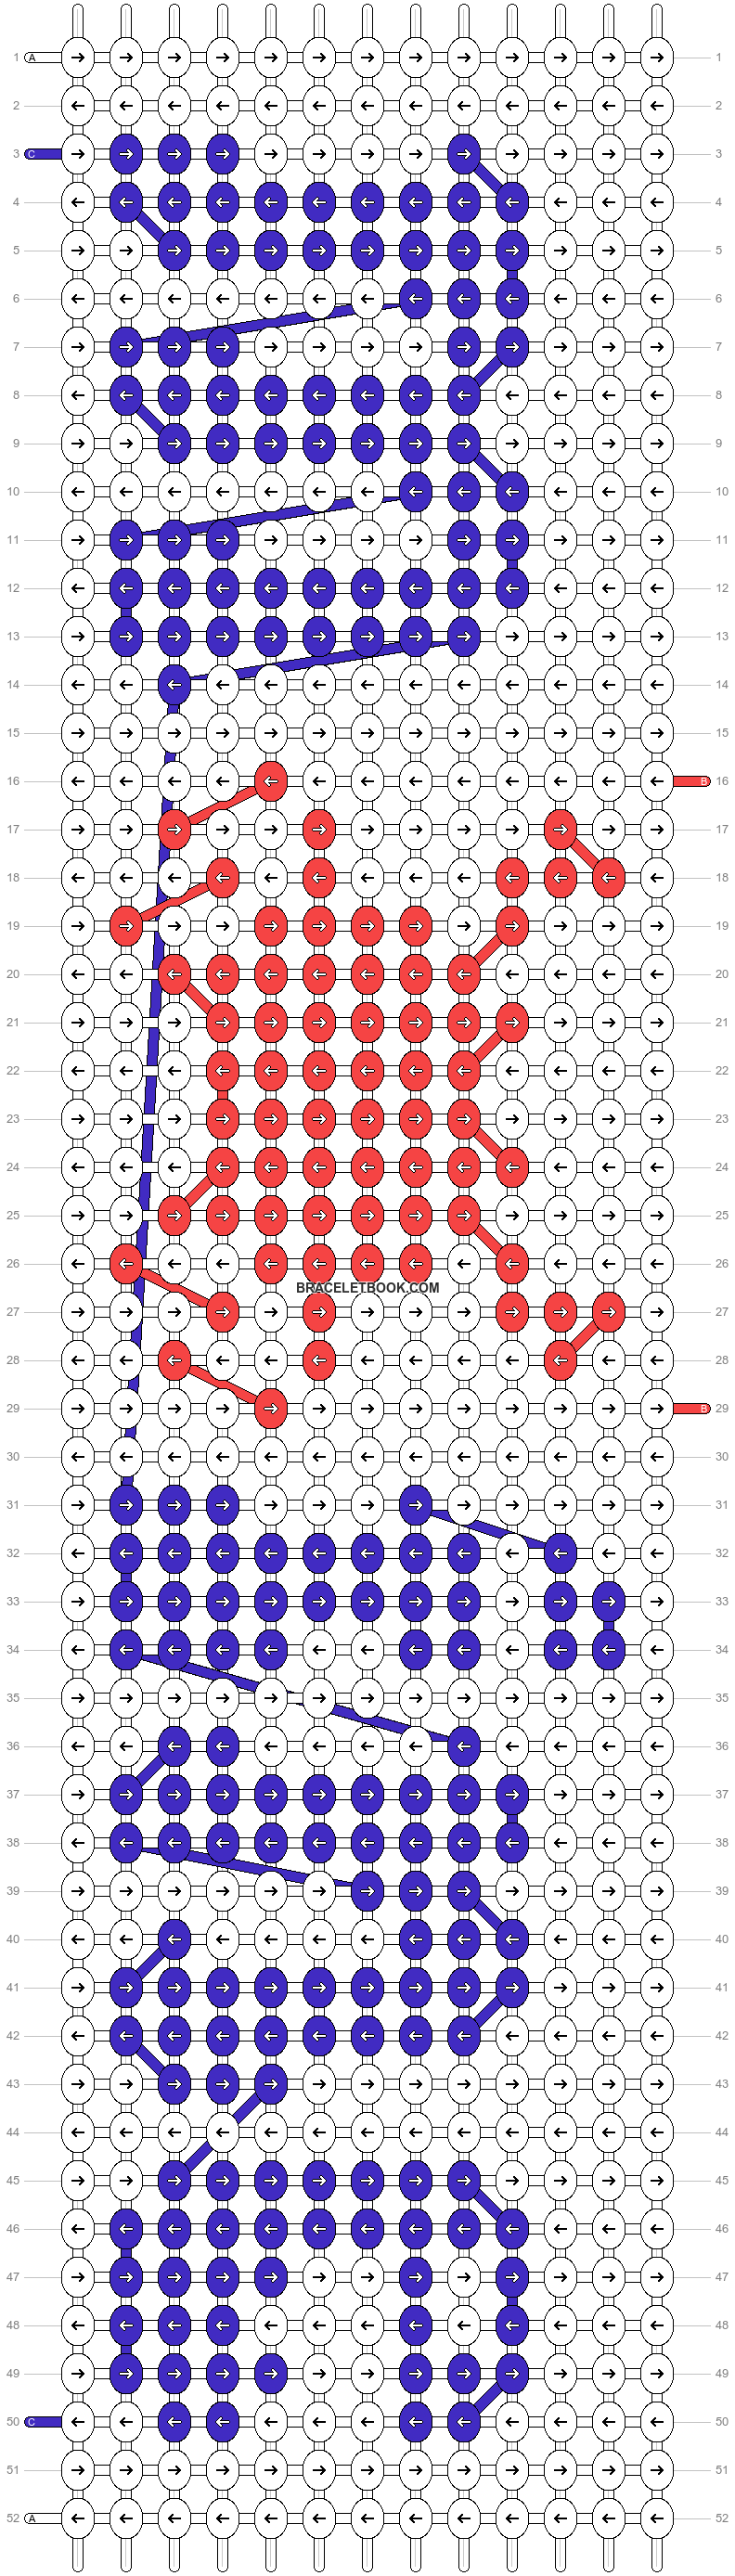 Alpha pattern #53597 variation #89159 pattern